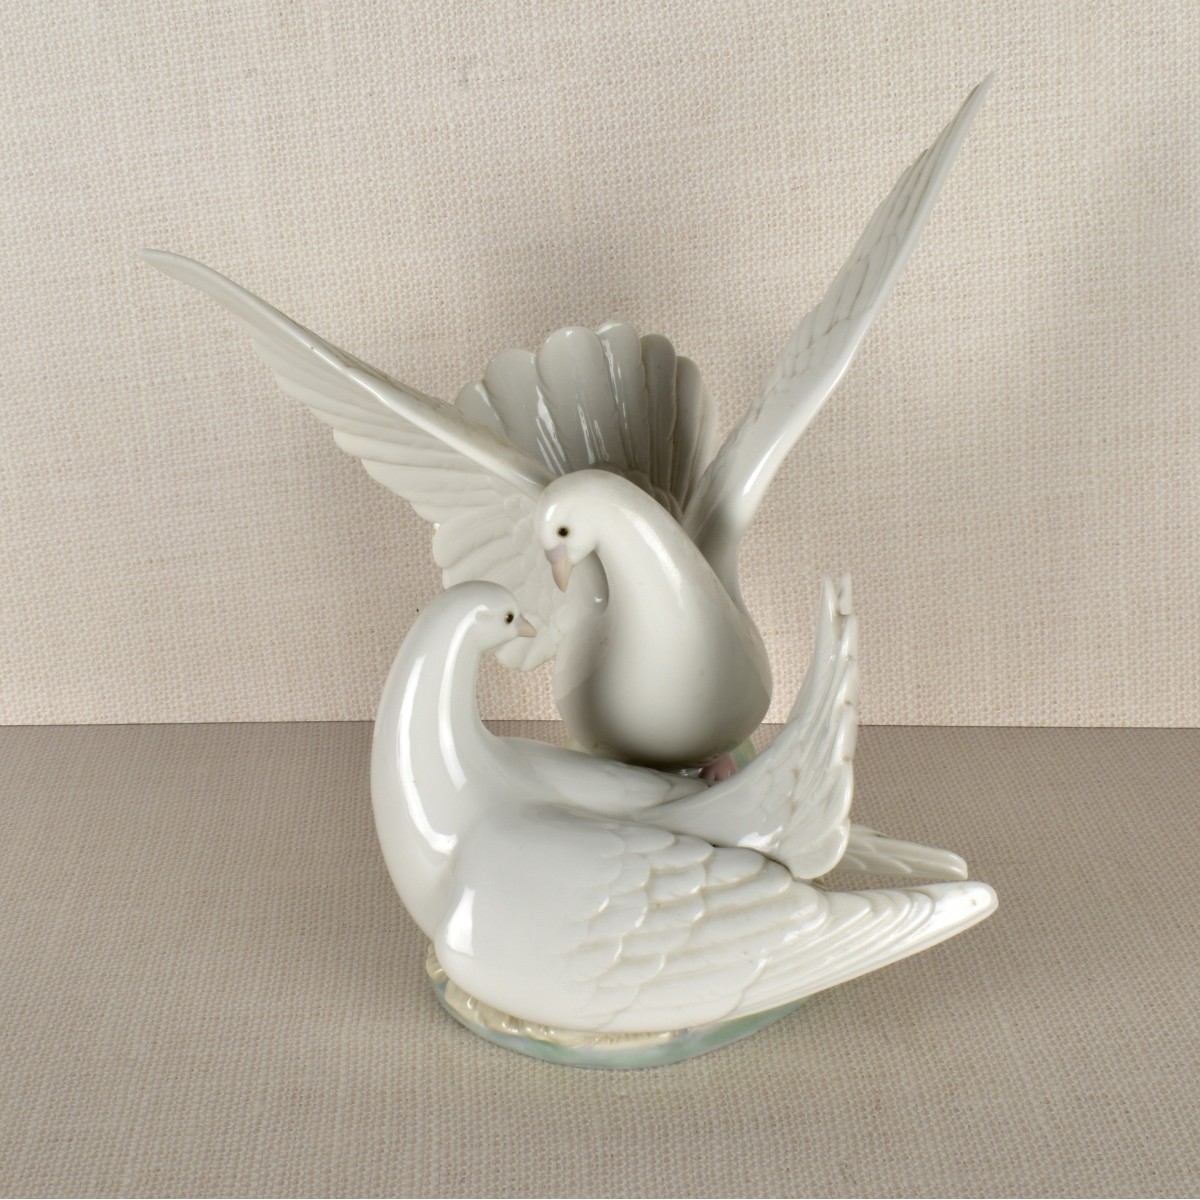 Lladro Figurine of Doves